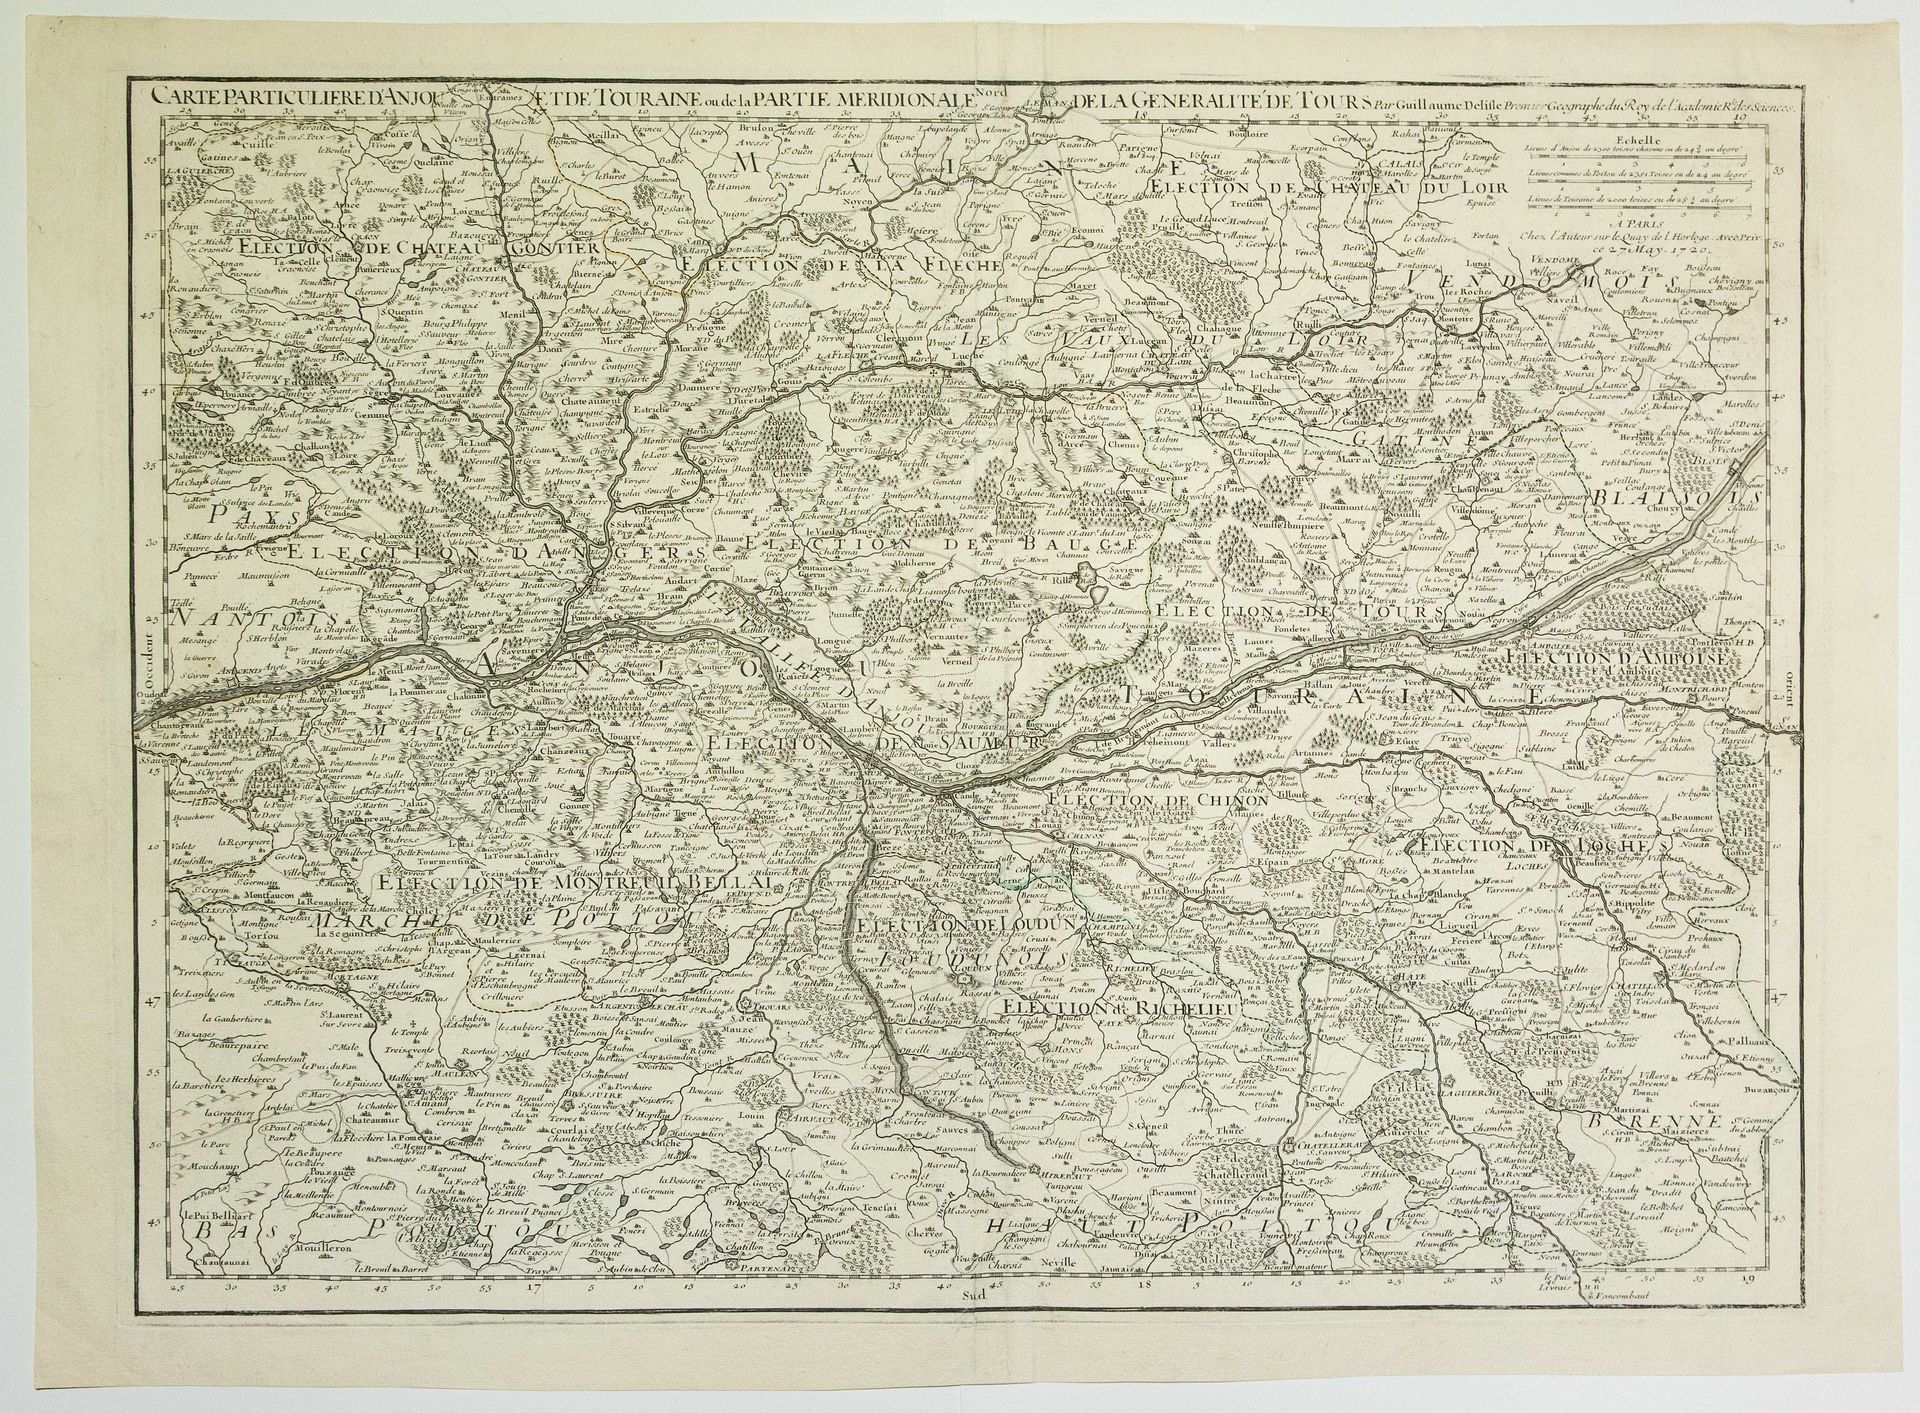 Null "ANJOU和TOURAINE或TOURS总体南部的地图"，由科学院的国王第一地理学家Guillaume De LISLE绘制。1720年5月27日，&hellip;